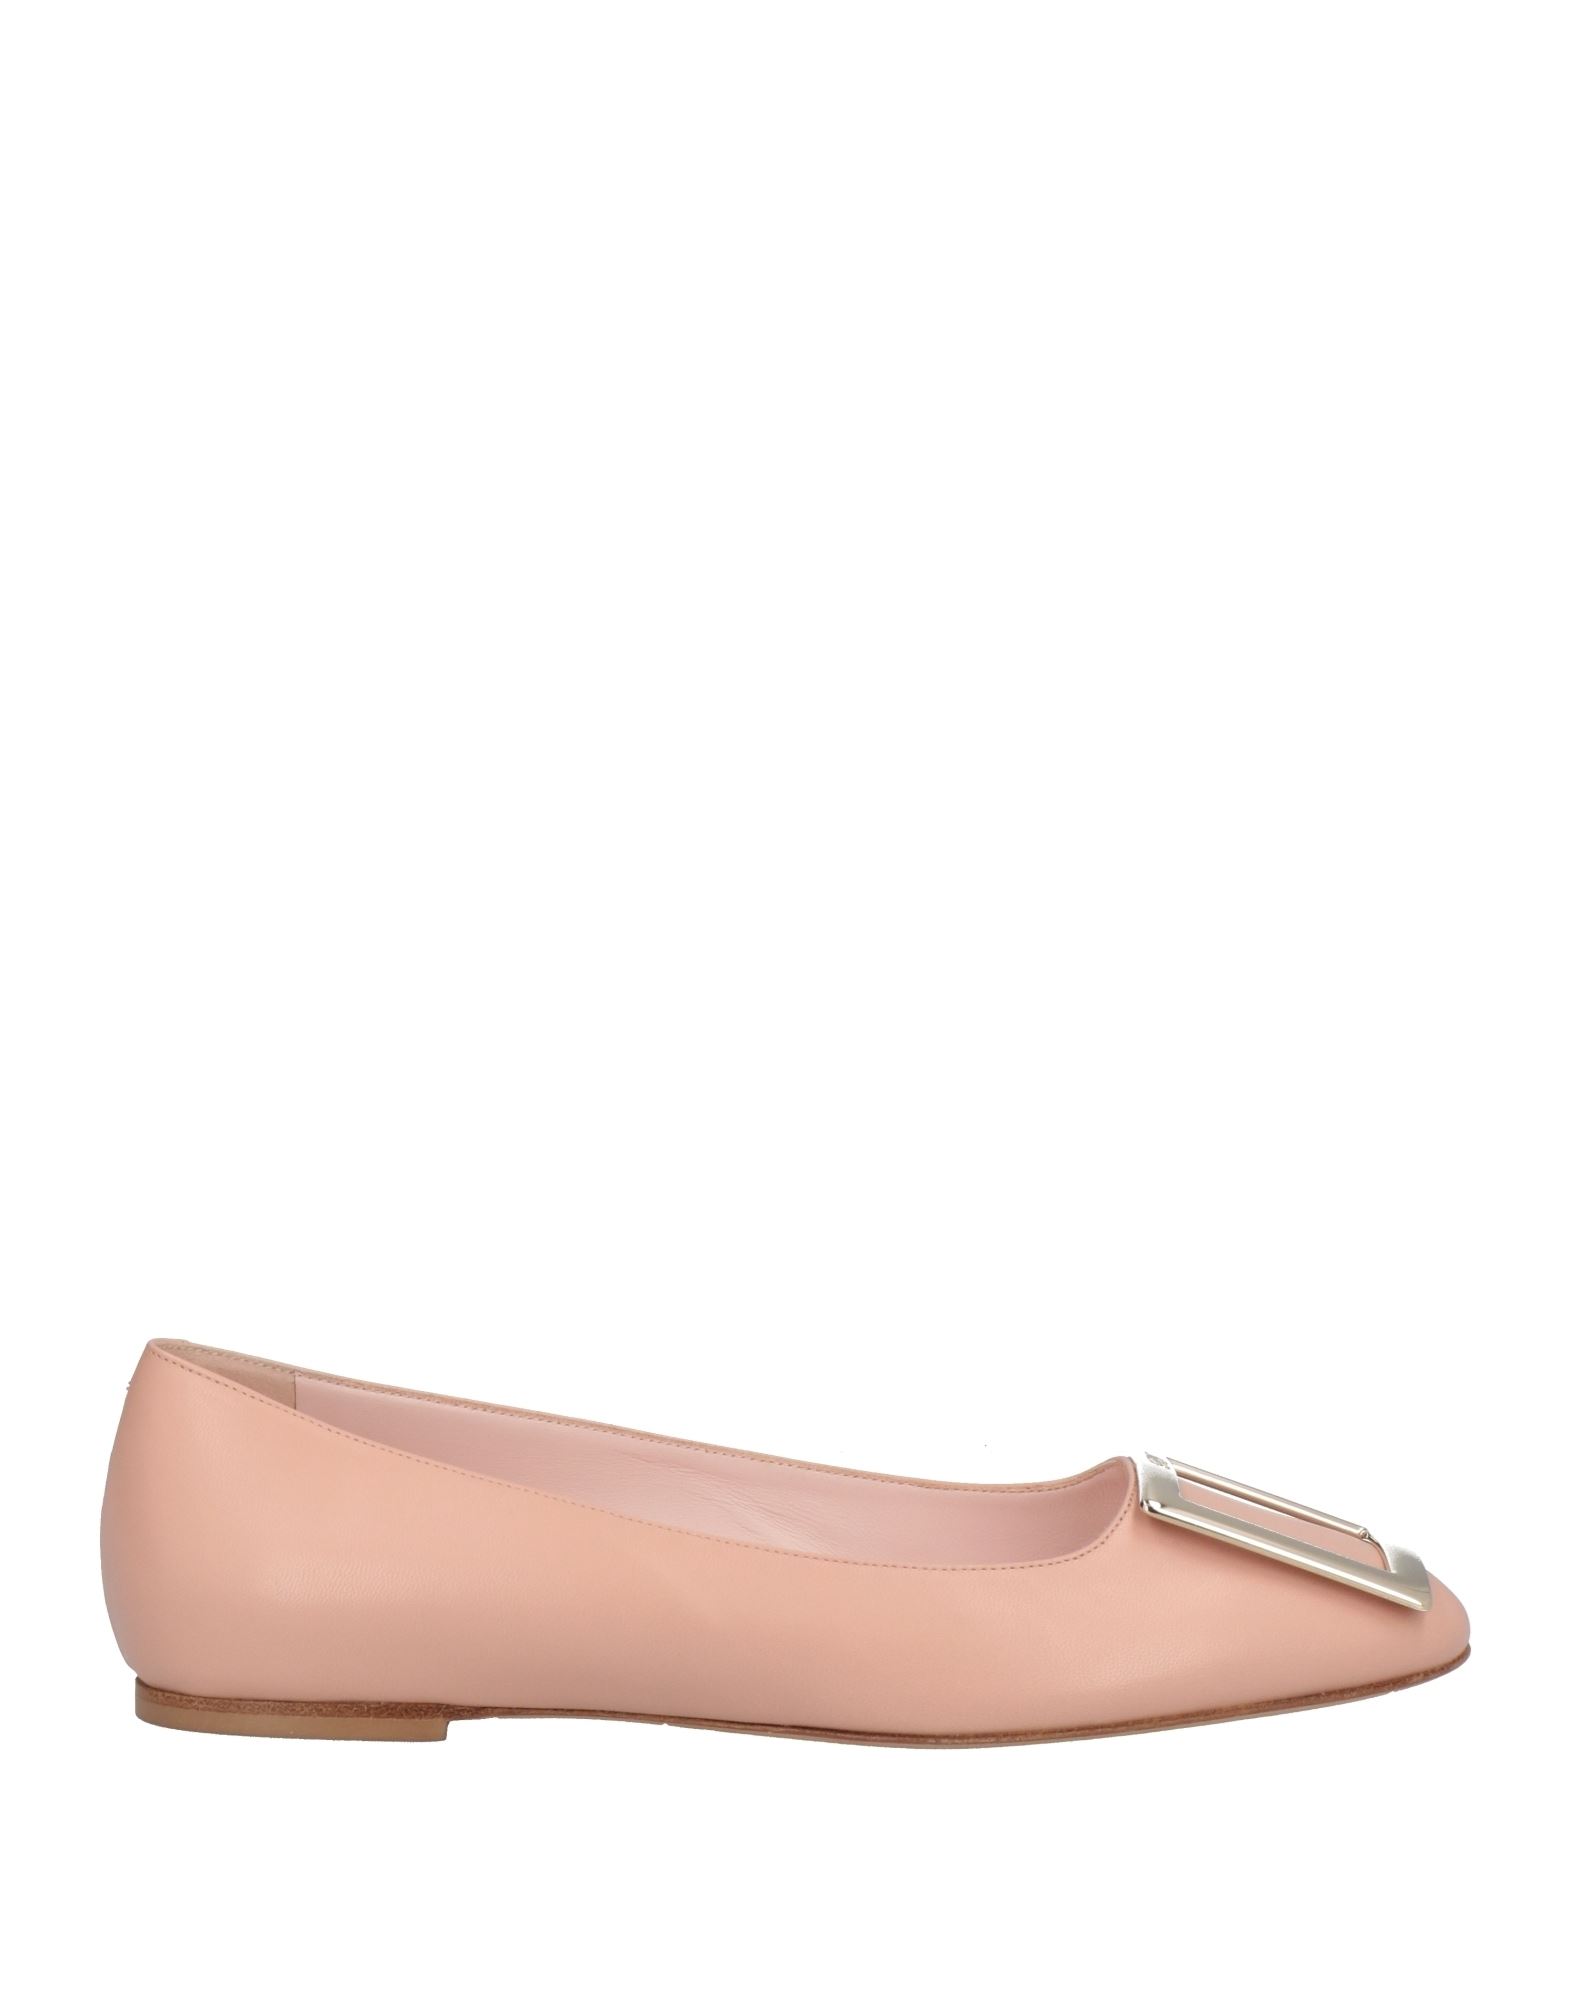 Shop Roger Vivier Woman Ballet Flats Pink Size 5.5 Soft Leather